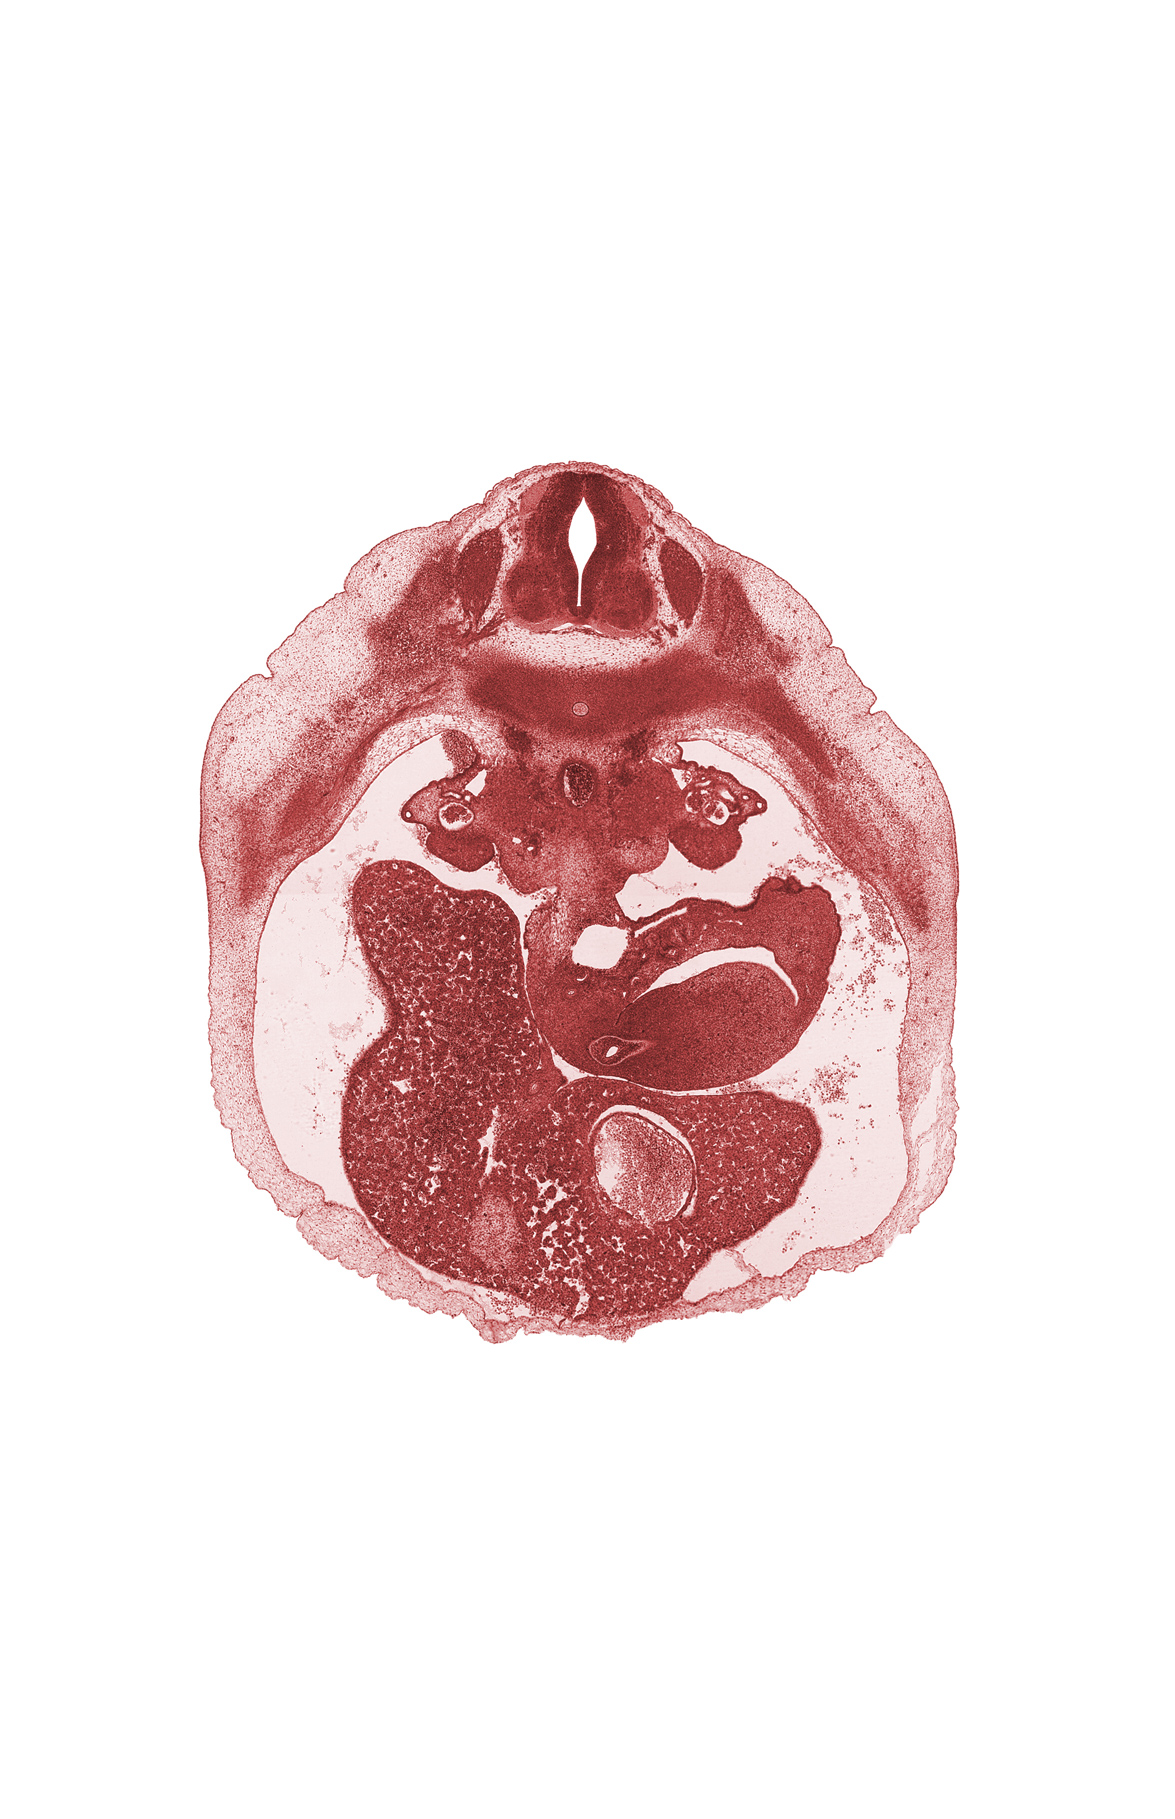 T-9 spinal ganglion, aorta, cephalic edge of gall bladder, dorsal pancreas, ductus venosus, hepatic duct(s), hepatic portal vein, left lobe of liver, lesser sac (omental bursa), paramesonephric groove, peritoneal cavity, pyloric antrum of stomach, rib 10, right lobe of liver, spleen, splenic vein